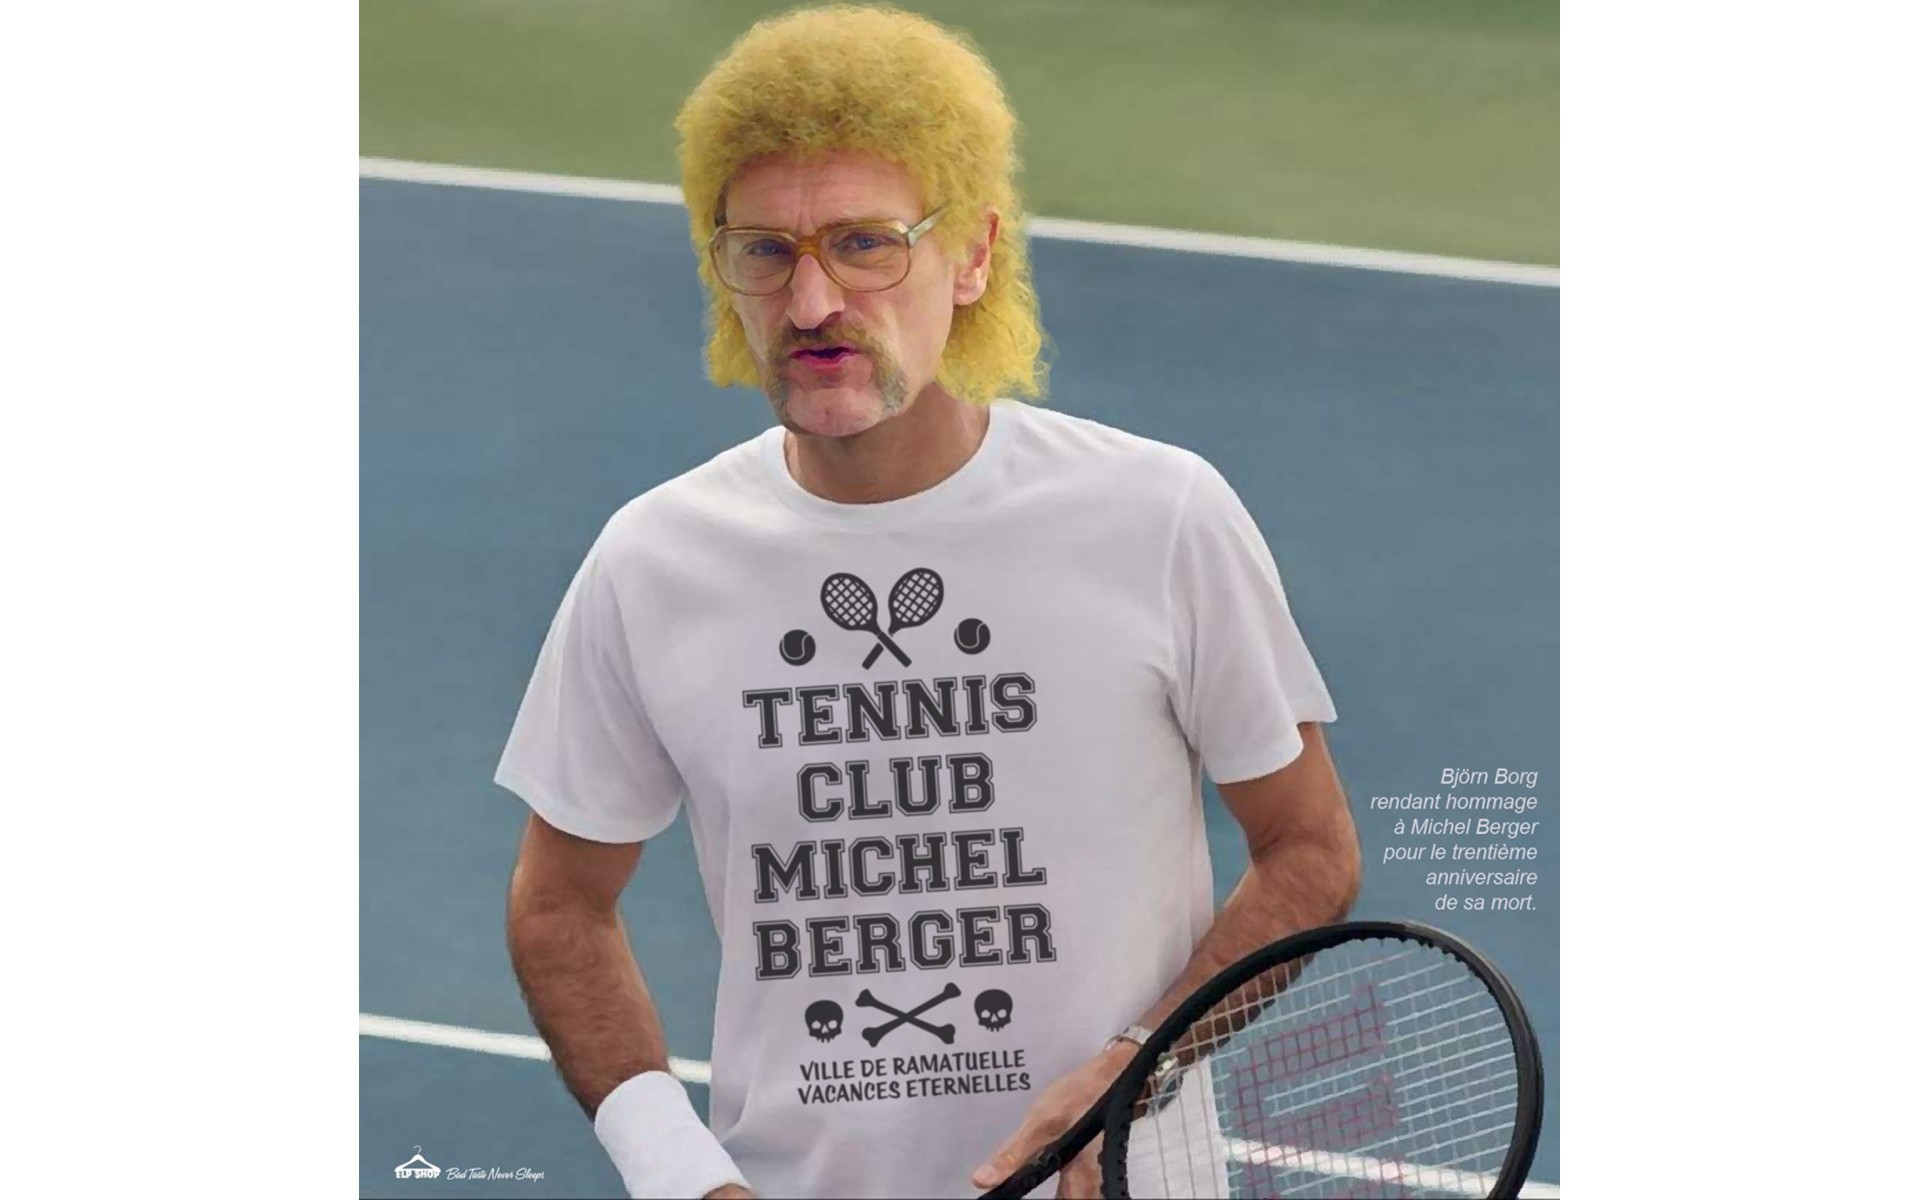 Tennis club Michel berger